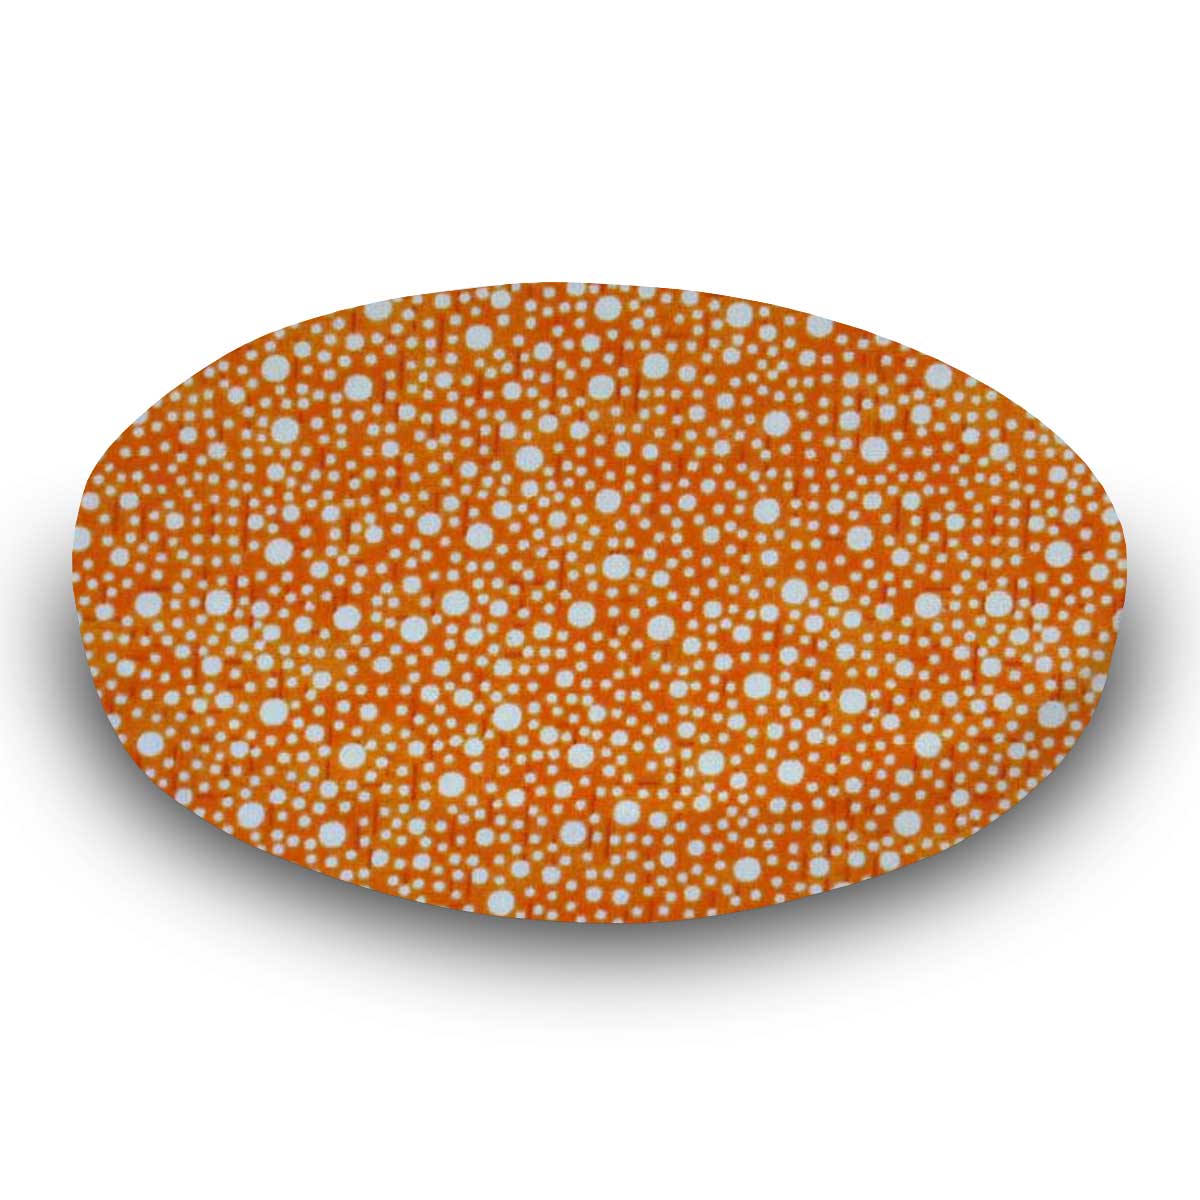 Oval Crib (Stokke Sleepi) - Confetti Dots Orange - Fitted  Oval